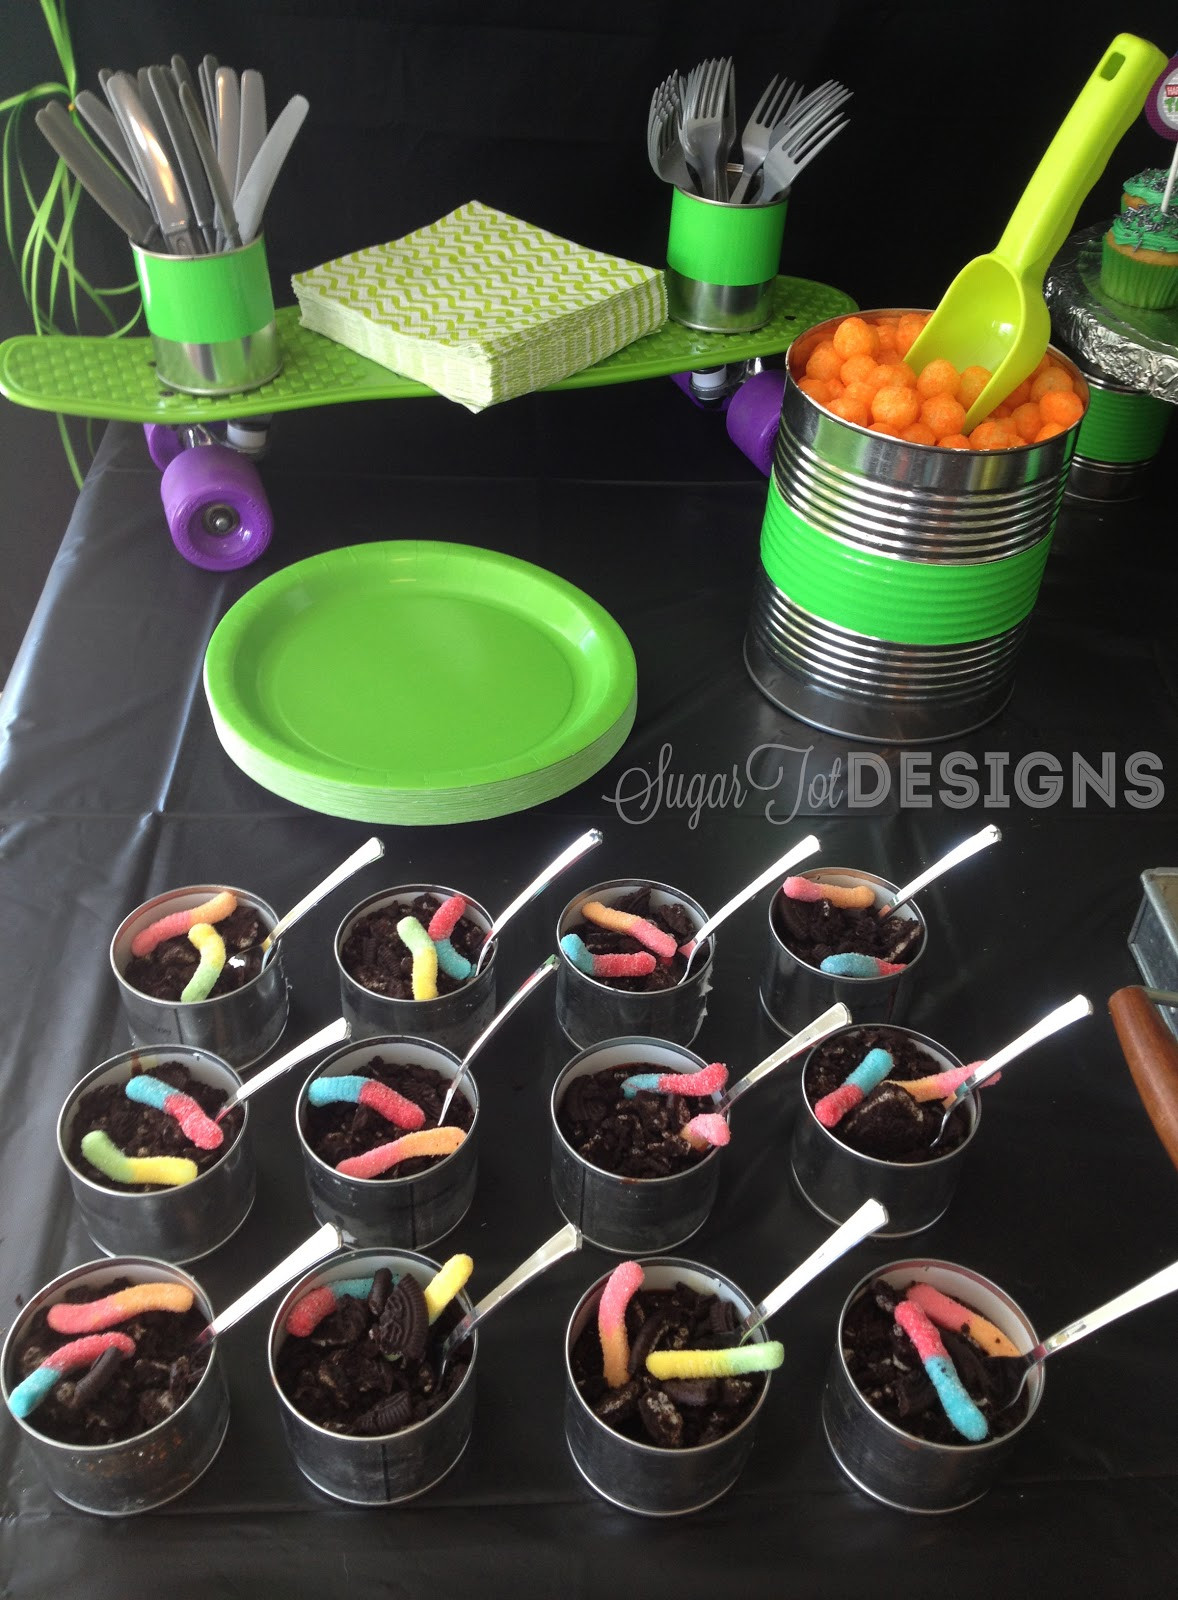 Best ideas about Ninja Turtles Birthday Decorations
. Save or Pin sugartotdesigns Teenage Mutant Ninja Turtle Party Now.